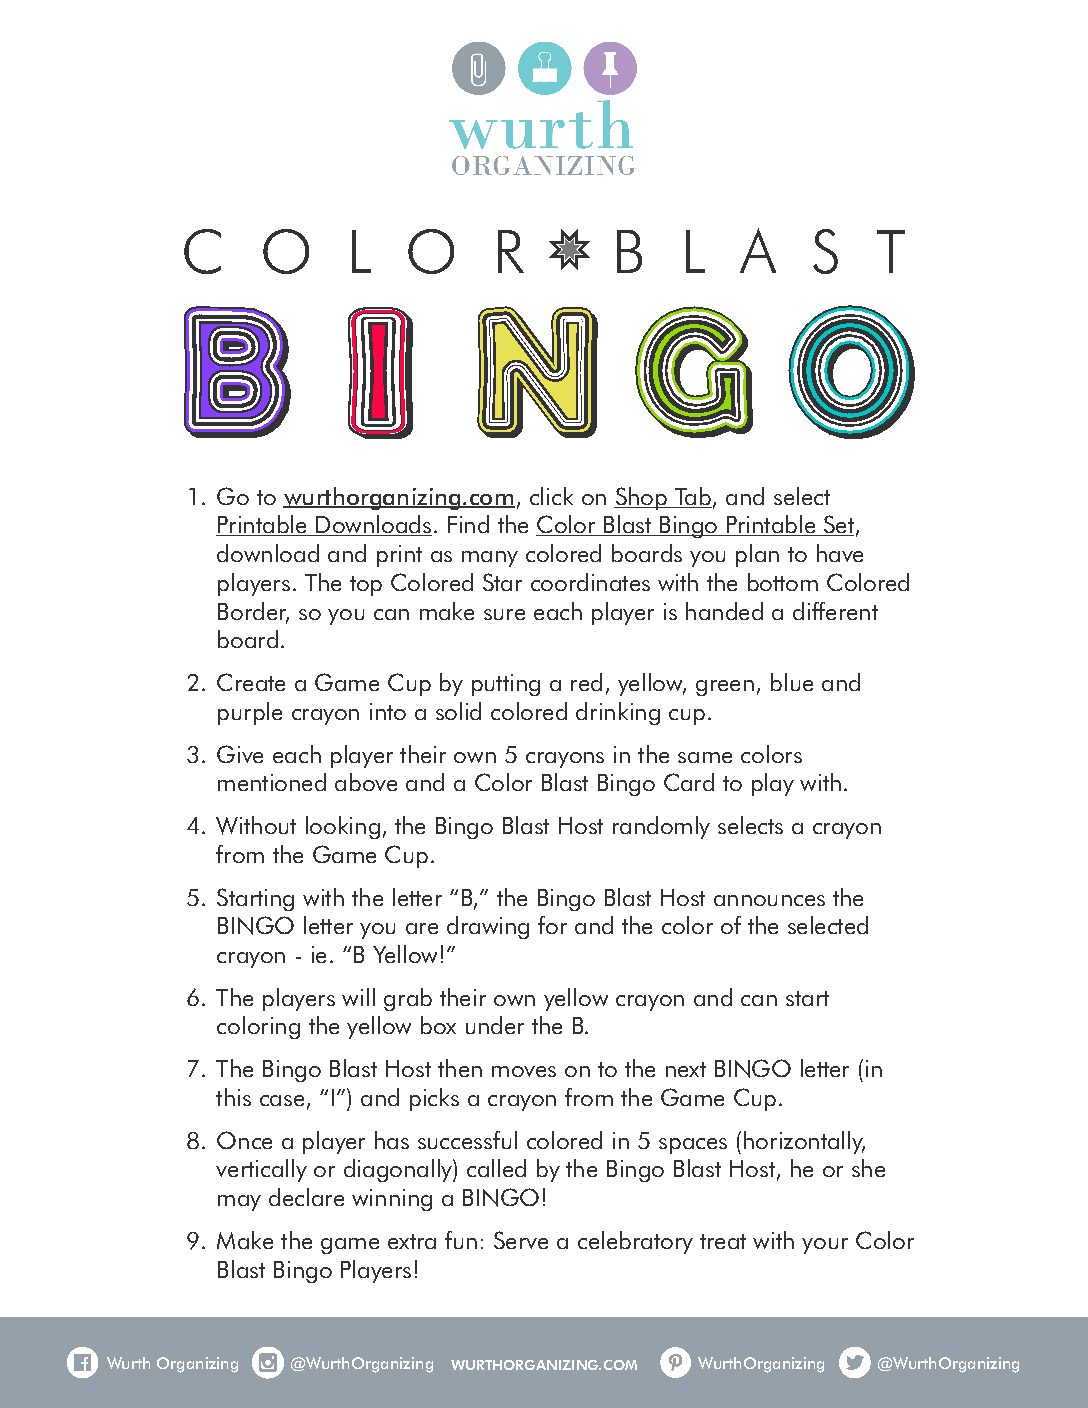 Bingo blast free bingo games multiplayer